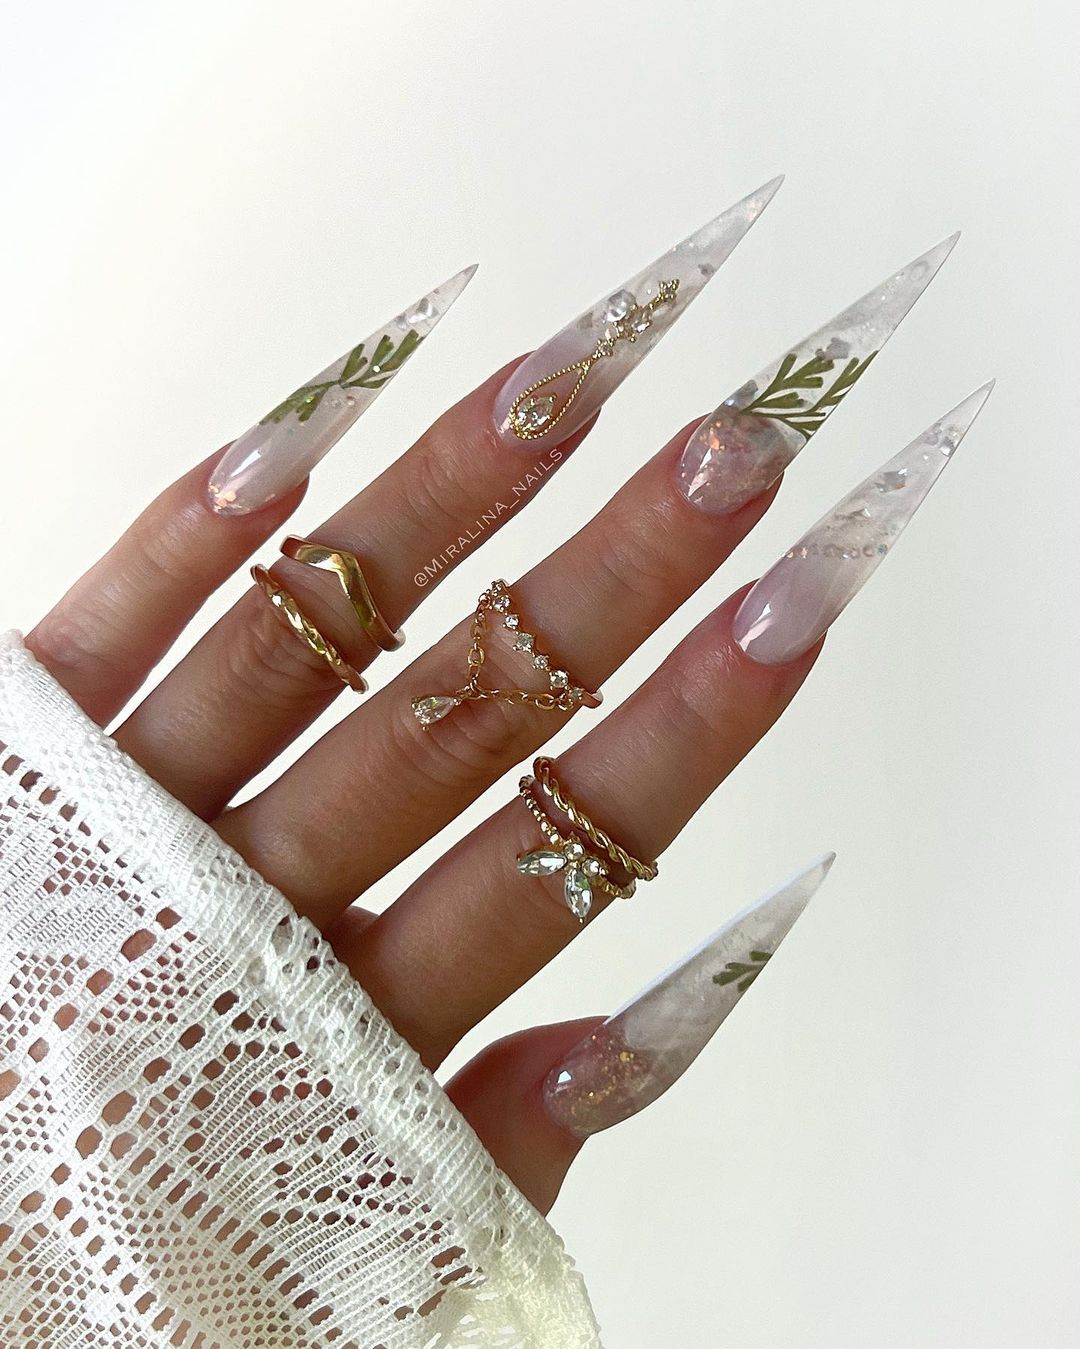 Lange witte stiletto nagels met bladeren